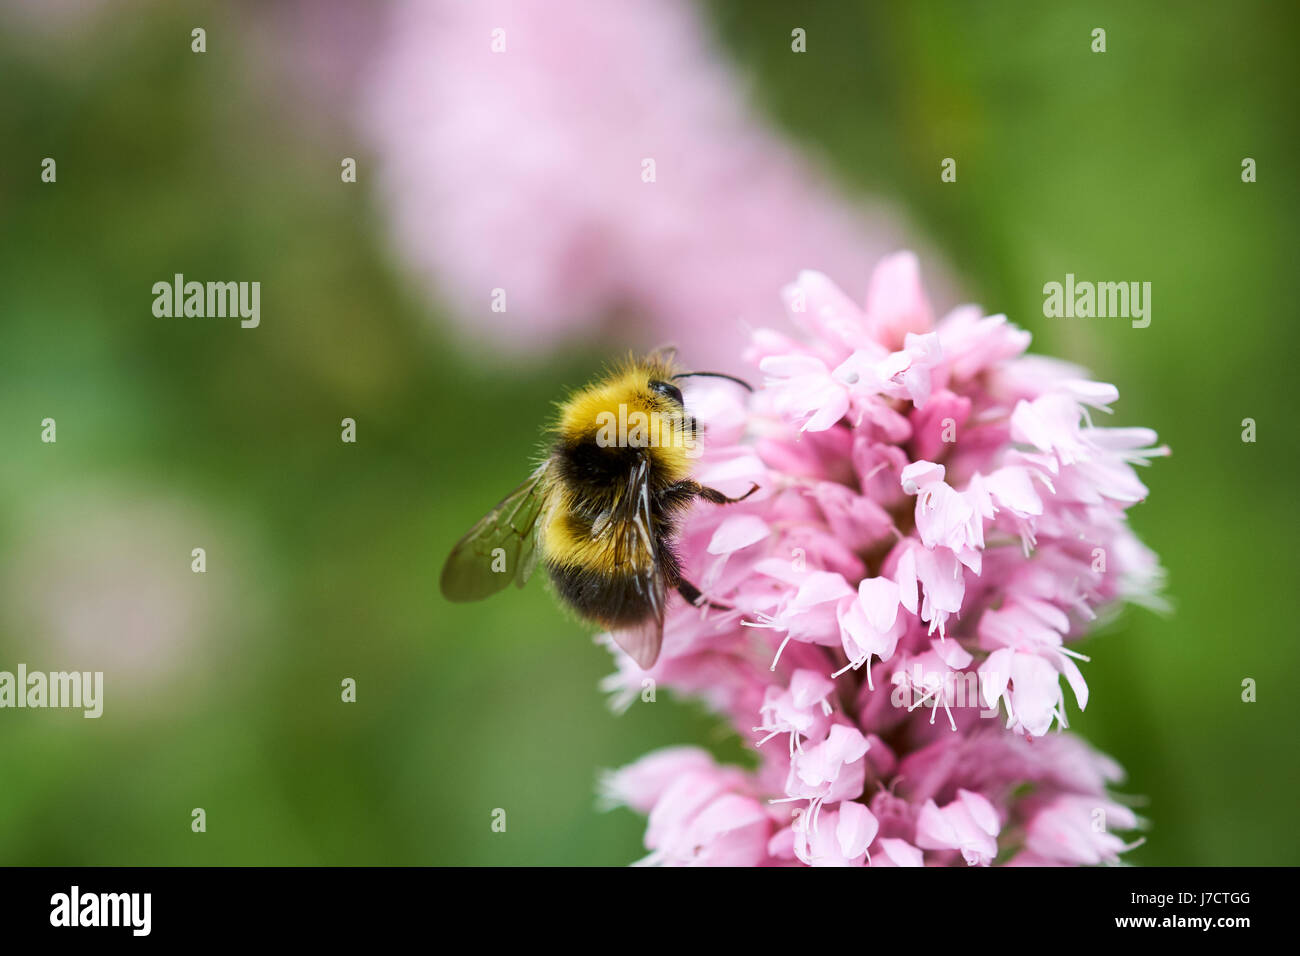 Buff-Tailed Bumble Bee (Bombus terrestris) collecting nectar from a flowering Bistorta 'Superba' (Persicaria bistorta) garden plant, UK. Stock Photo